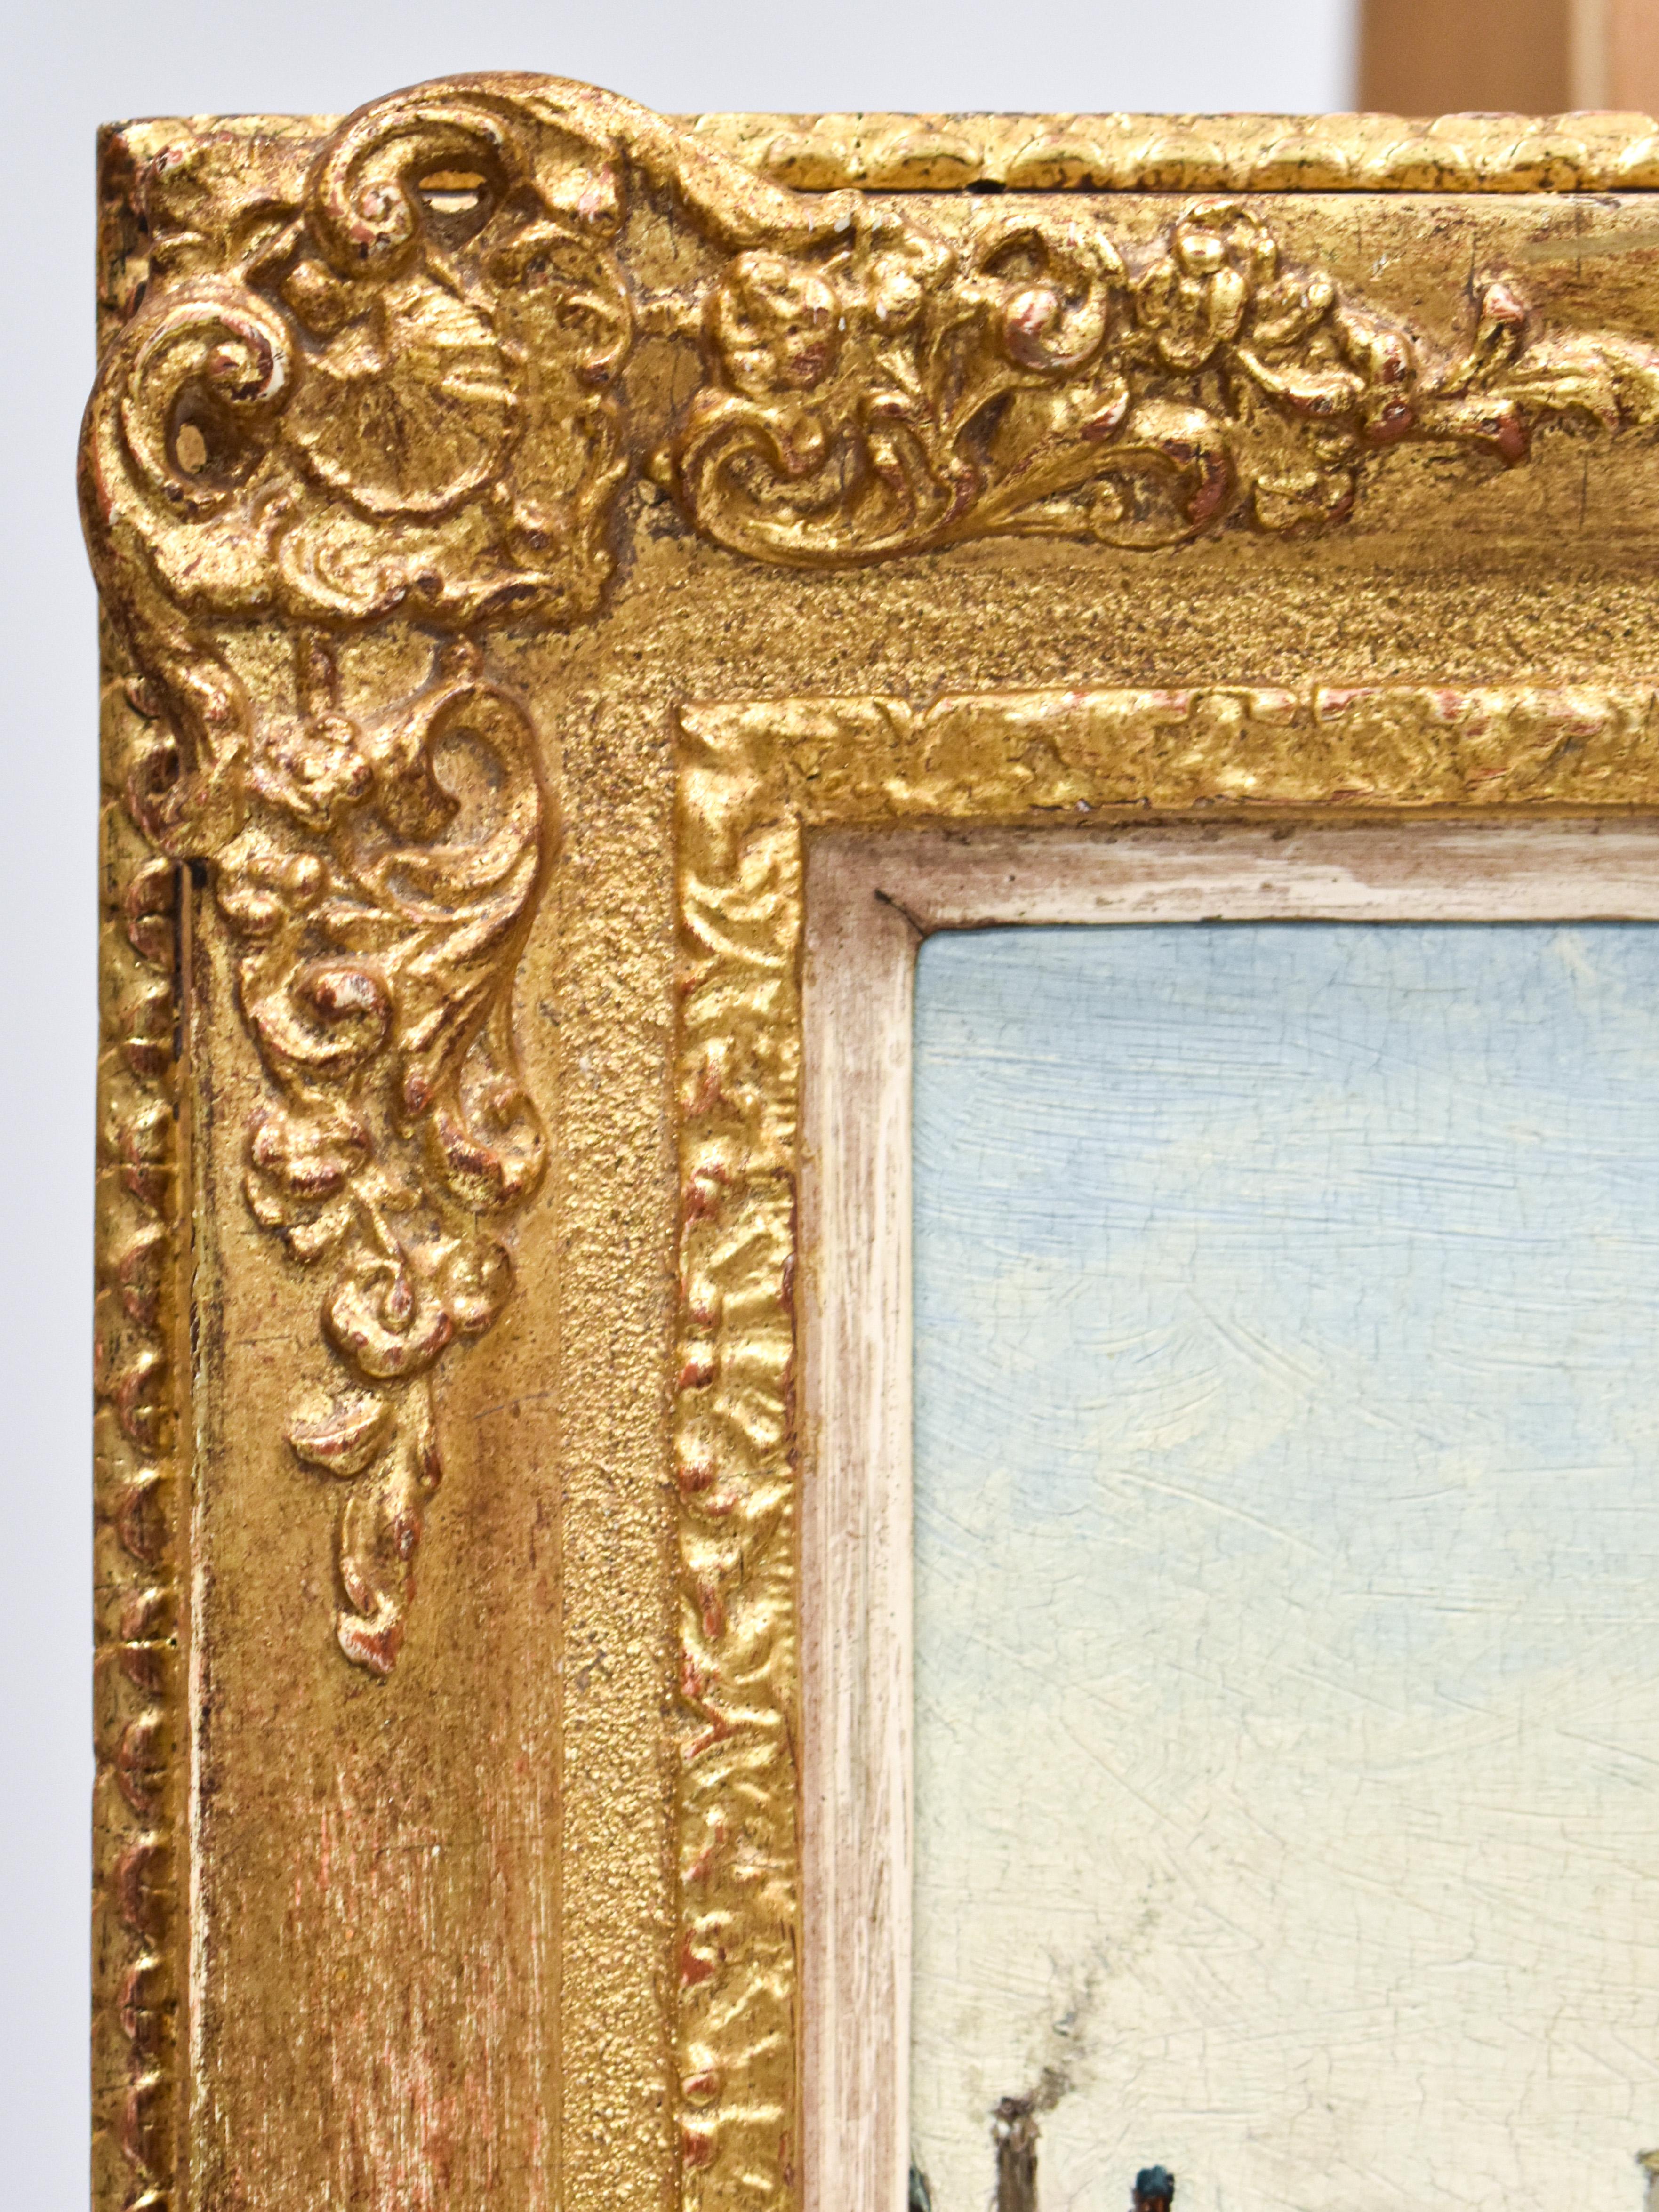 Cityscape in wintertime - O. R. de Jongh (1812-1896) - Oil paint on panel For Sale 1